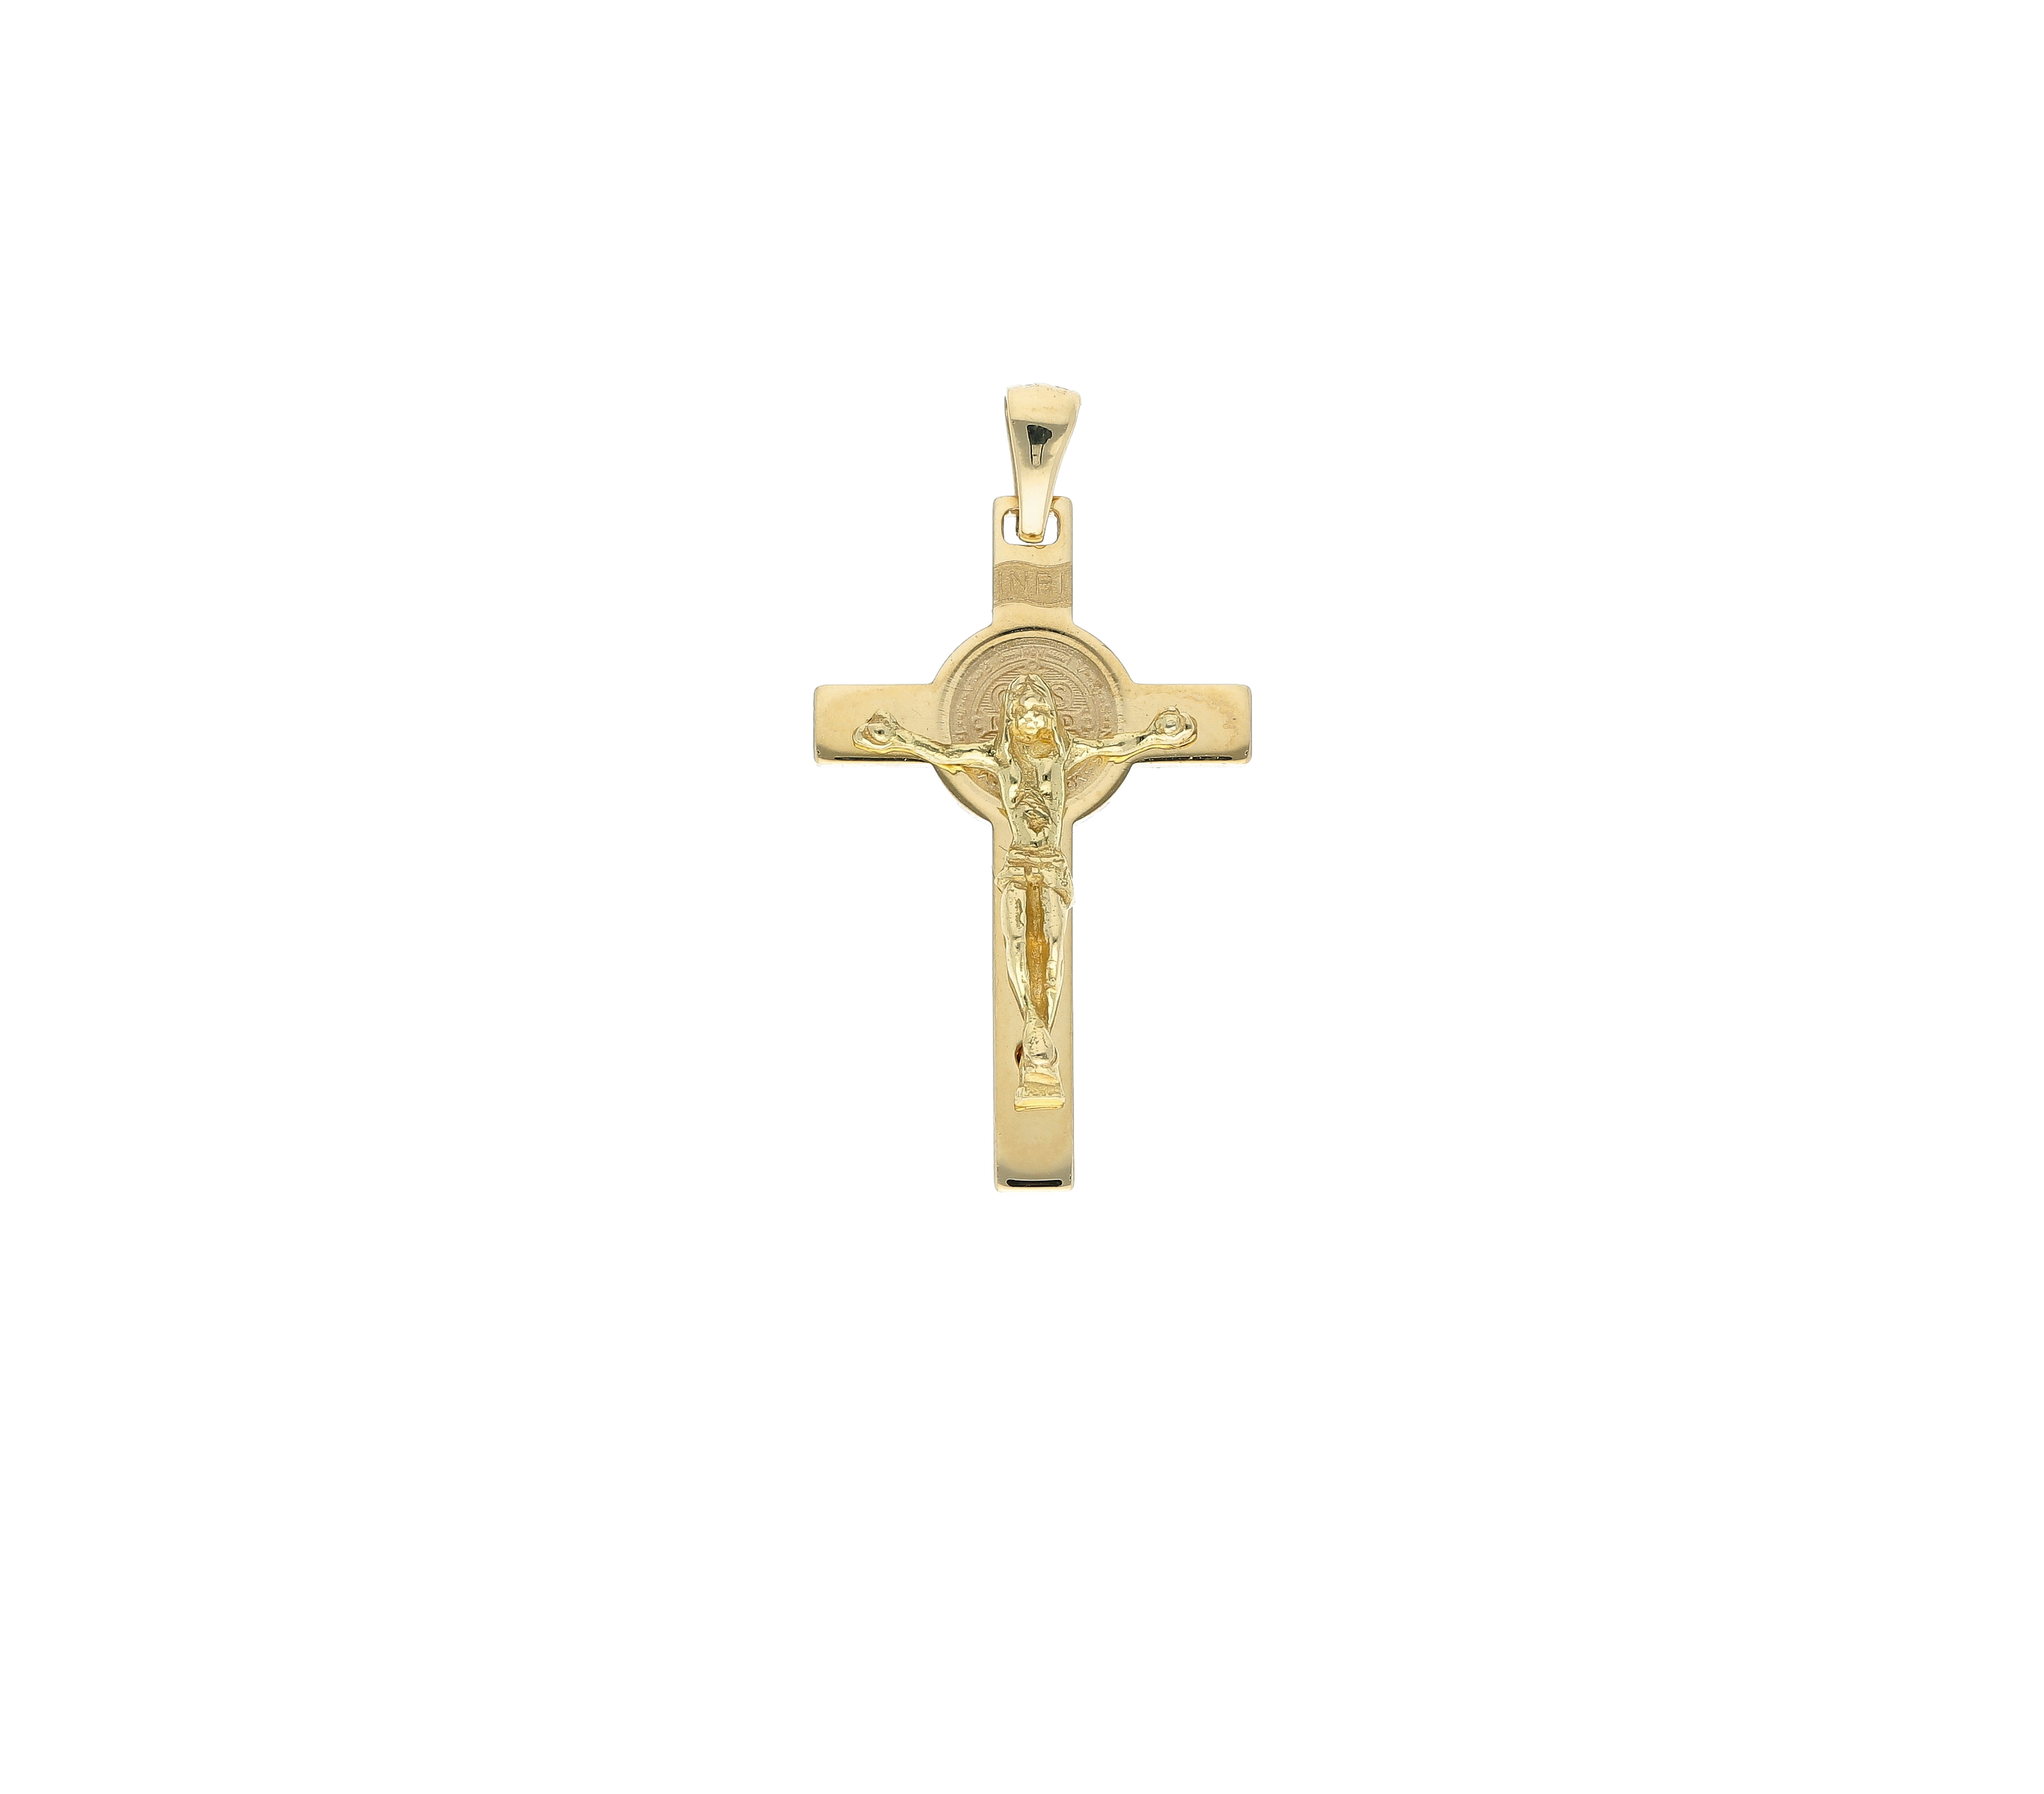 14K Solid Gold Italian Cross Pendant with Italian Gucci necklace 14K | eBay